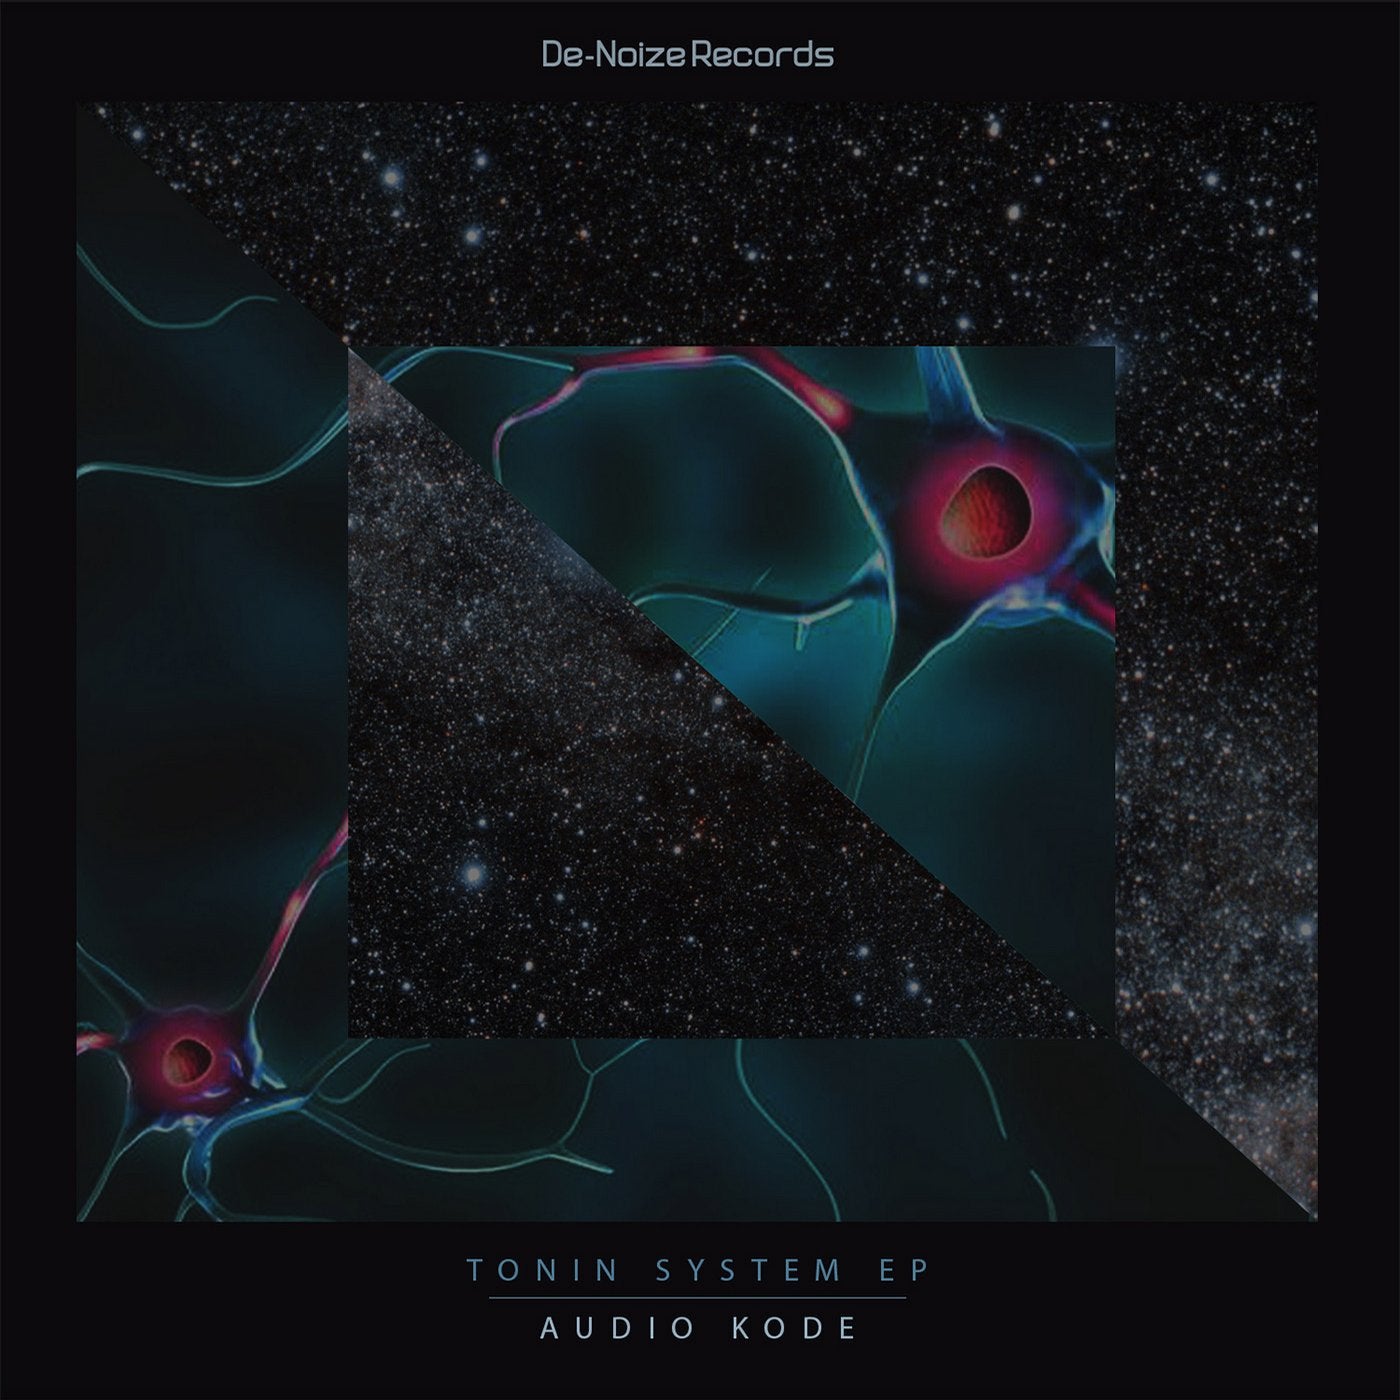 Tonin System EP